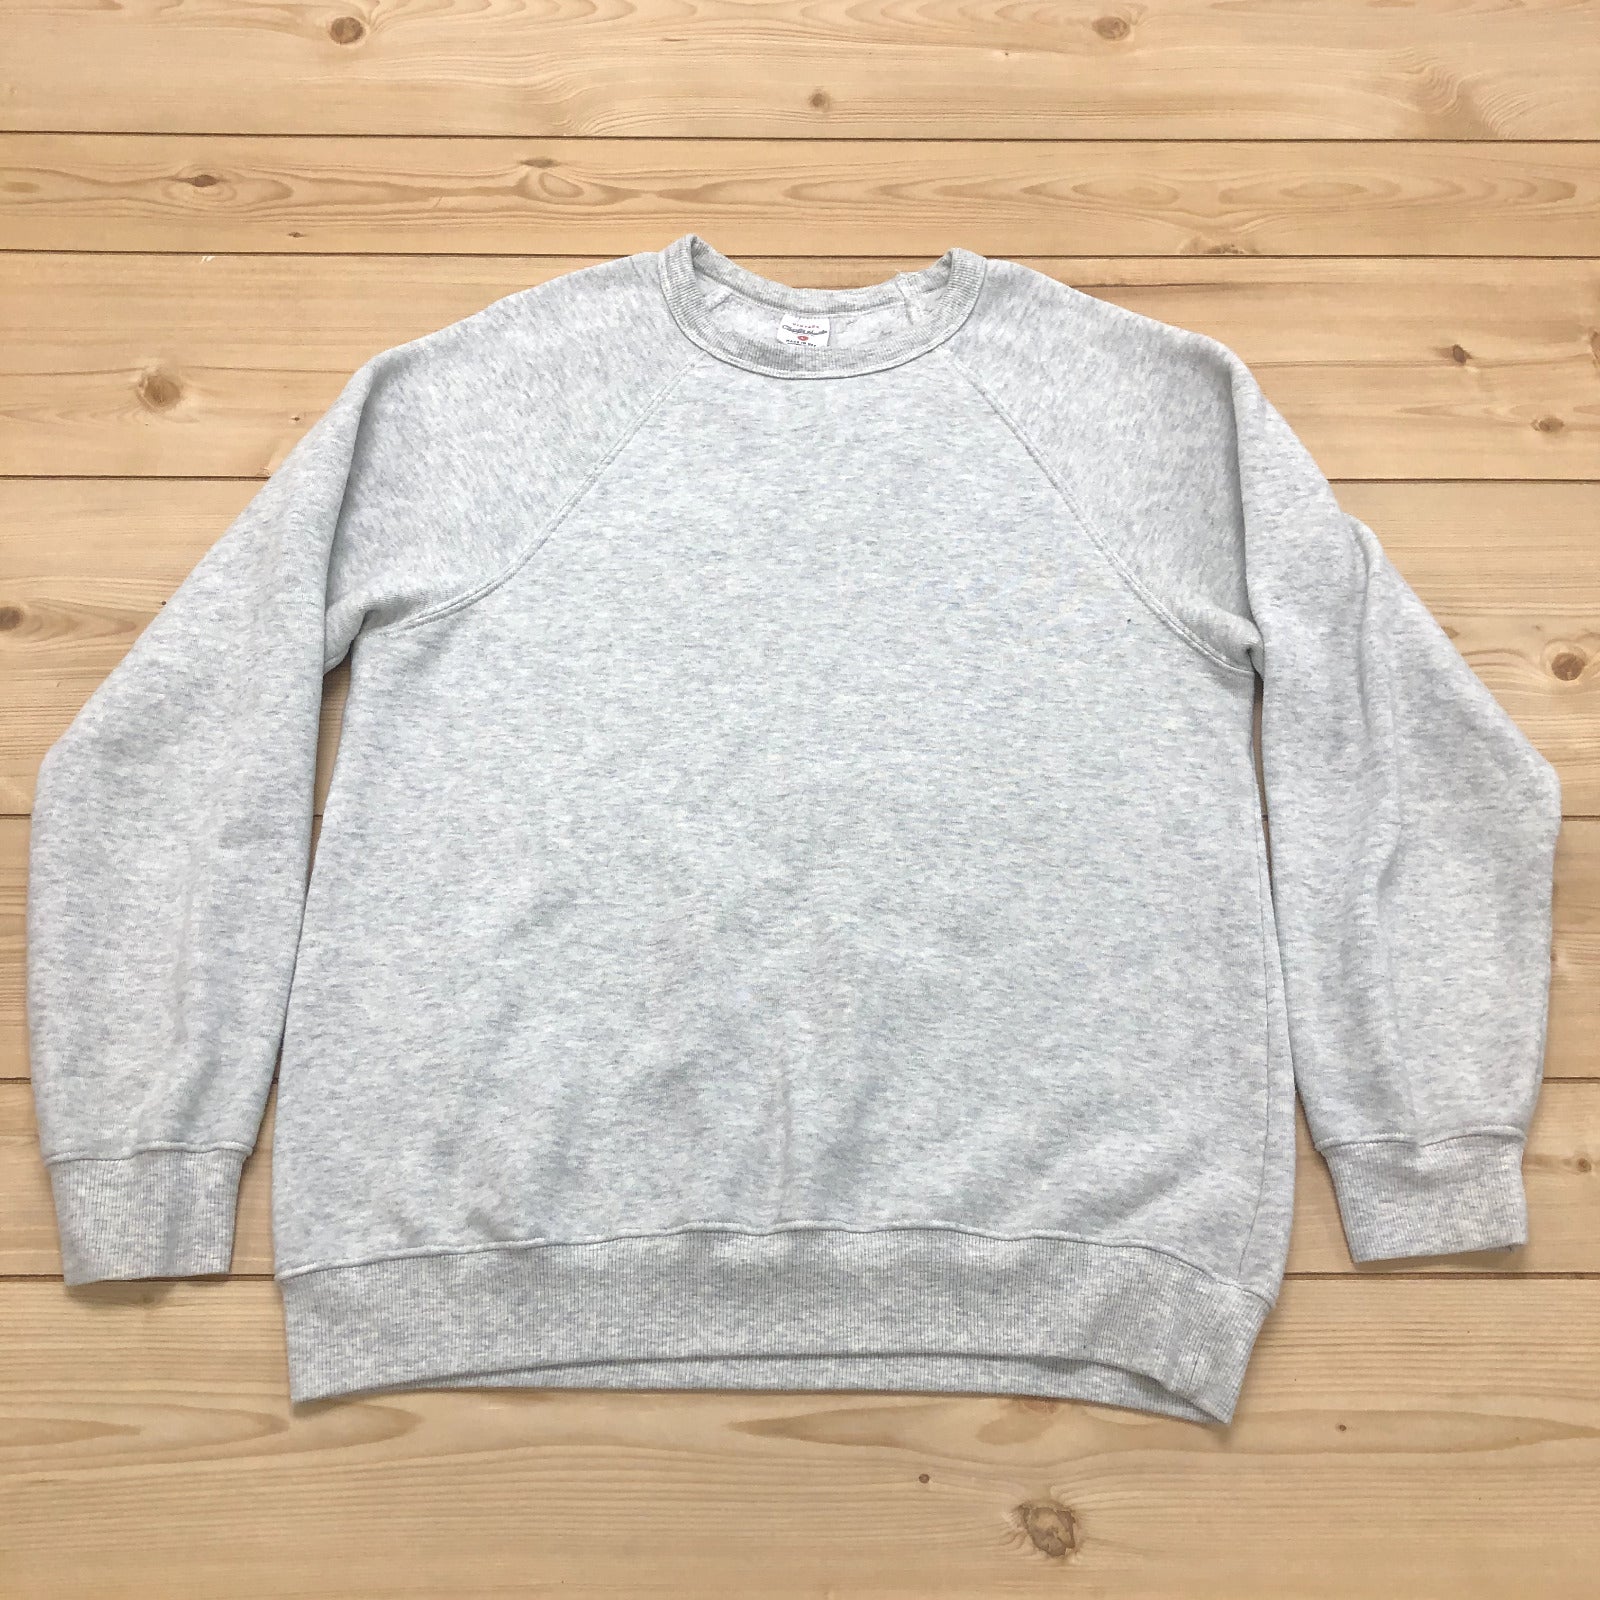 Charlie Hustle Grey Super Soft Long Sleeve Pullover Sweatshirt Adult Size L